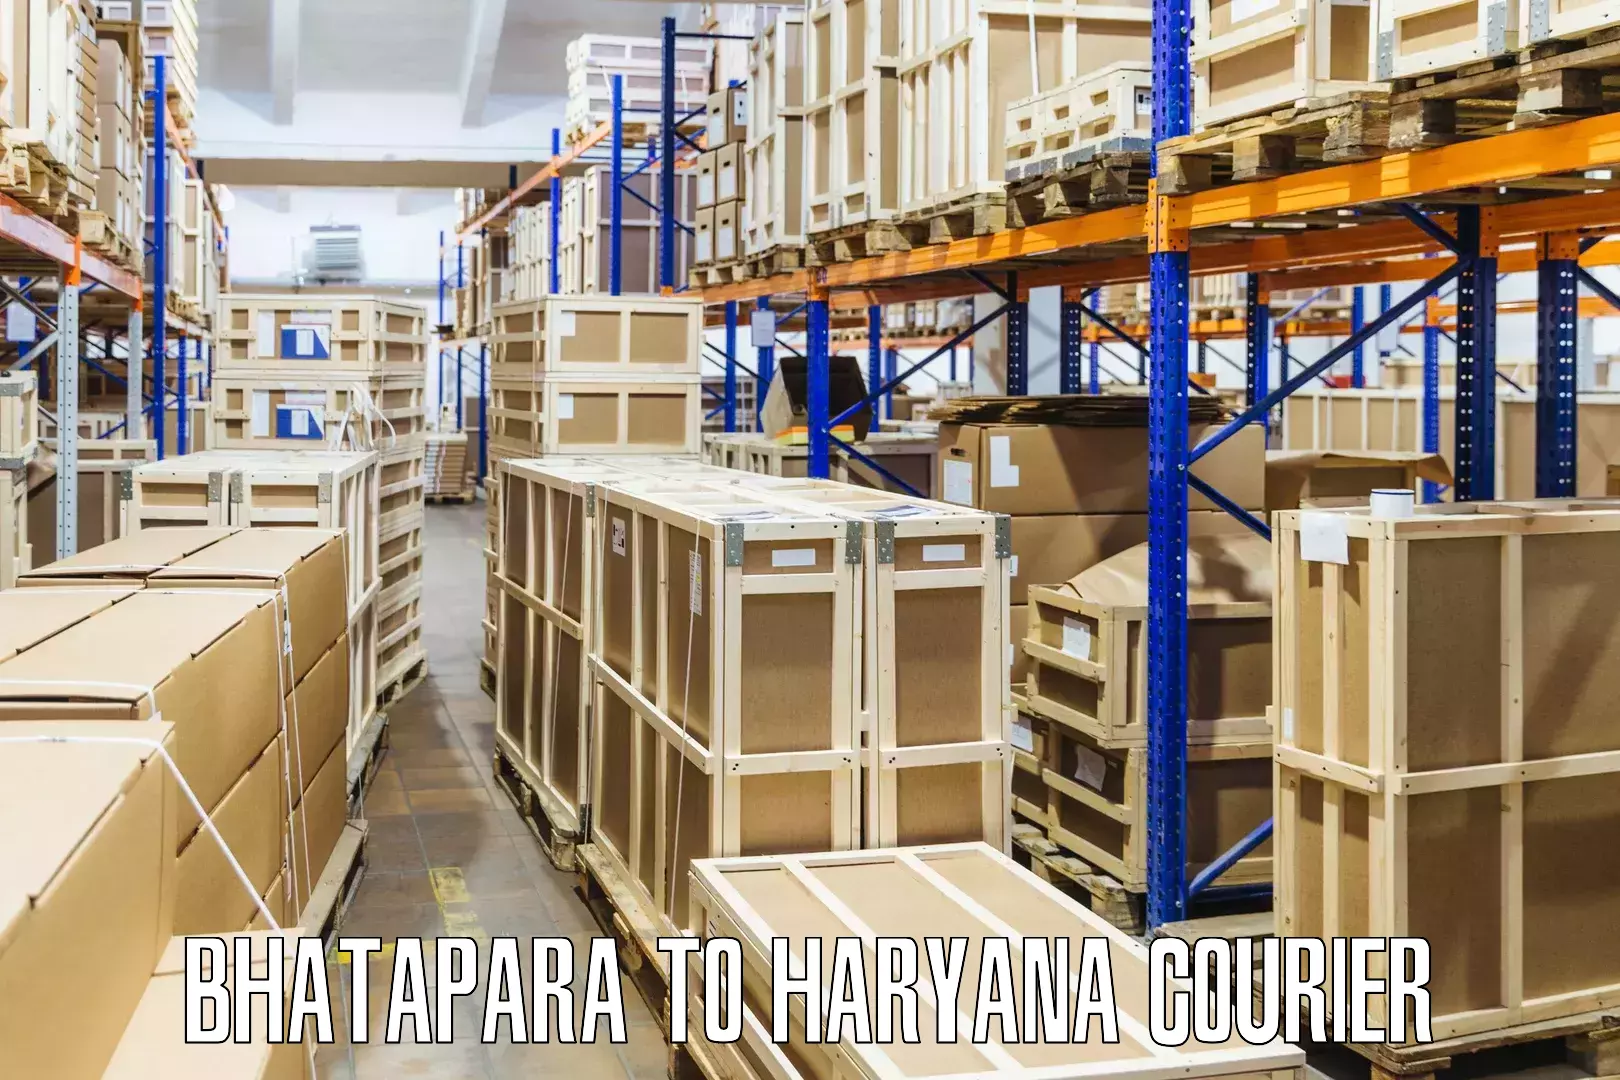 Quick booking process Bhatapara to NCR Haryana